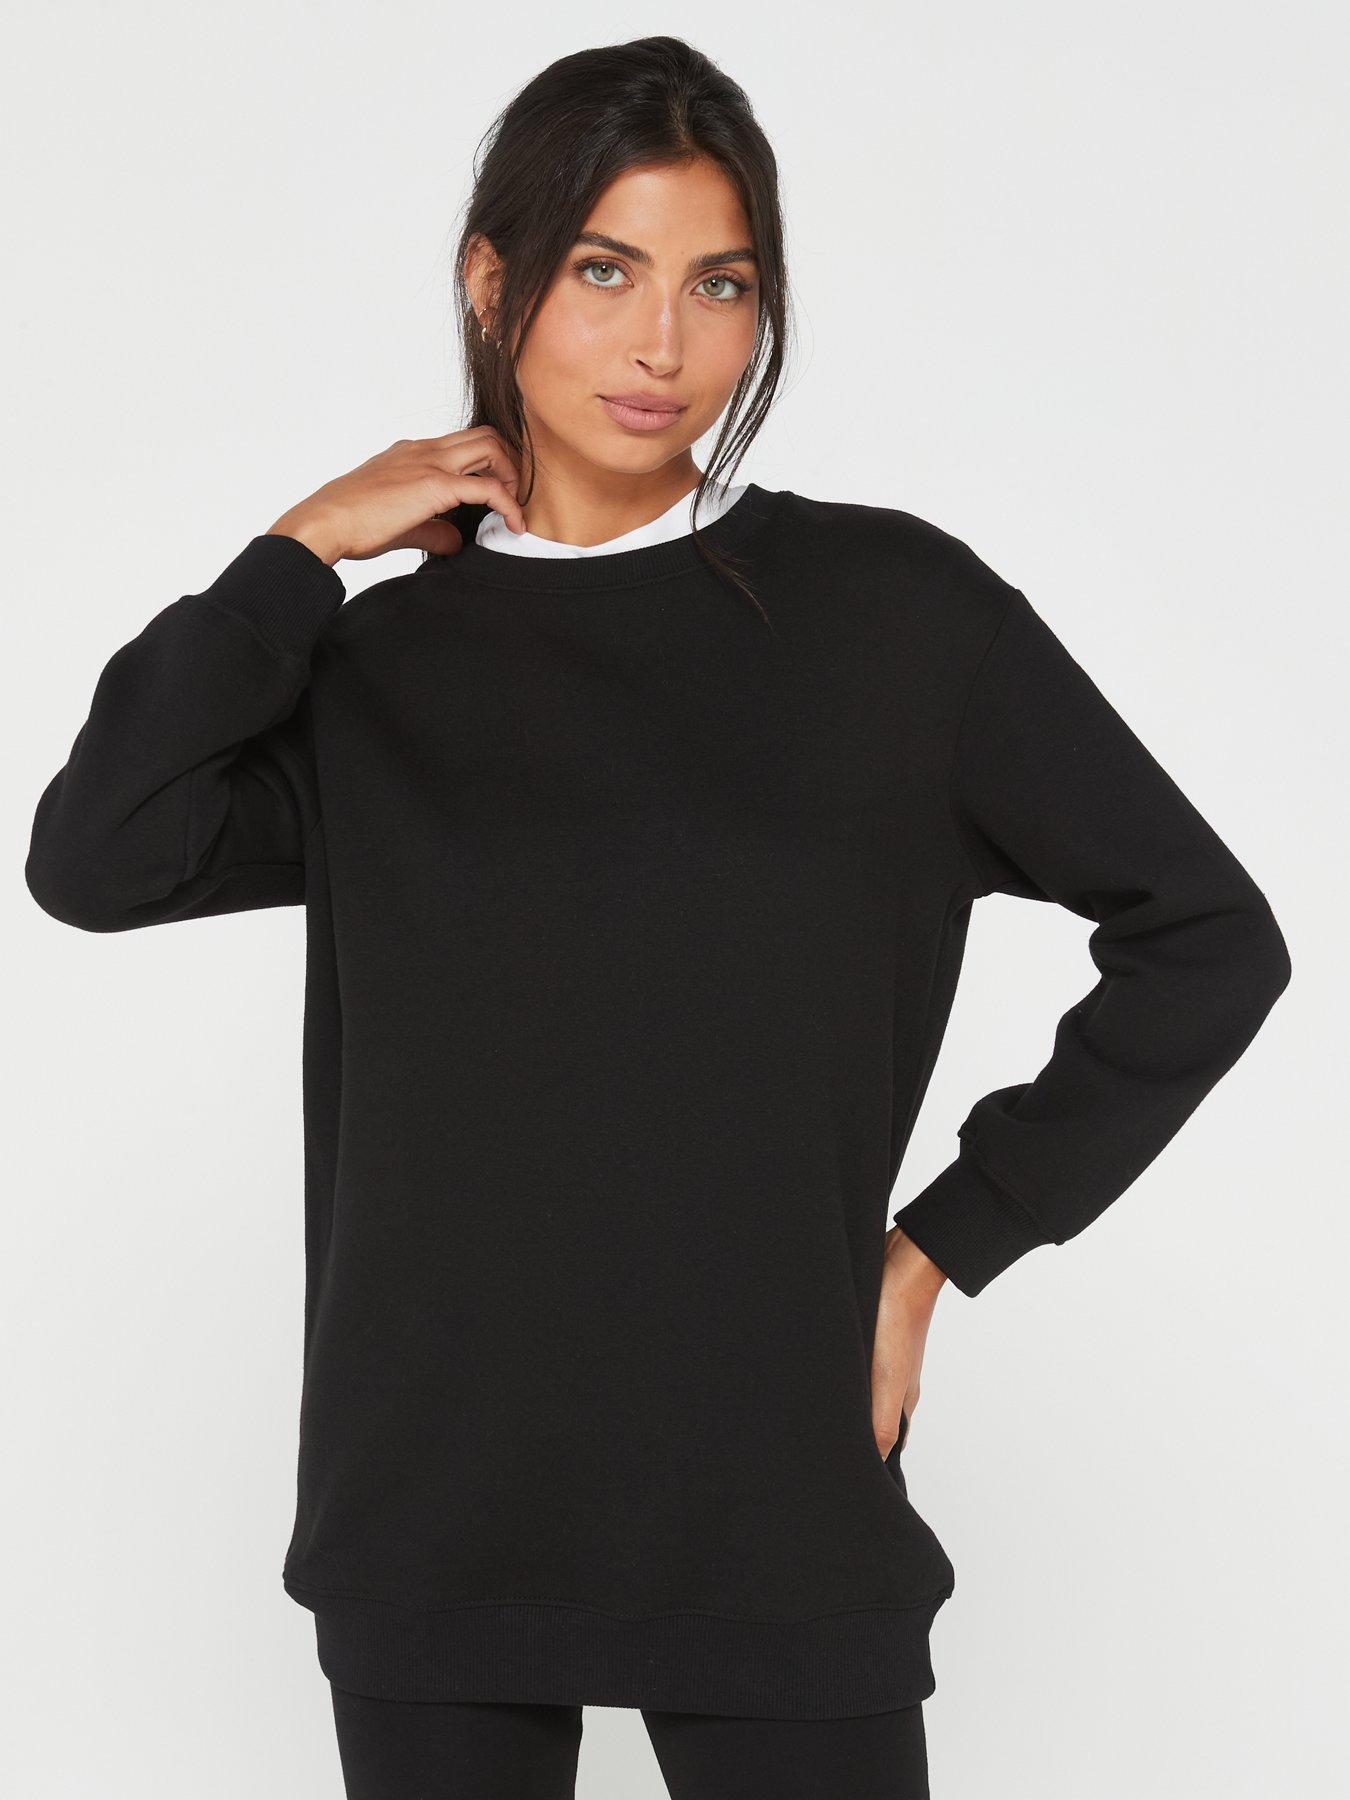 Shop Women's Hoodies, Ladies Sweatshirts